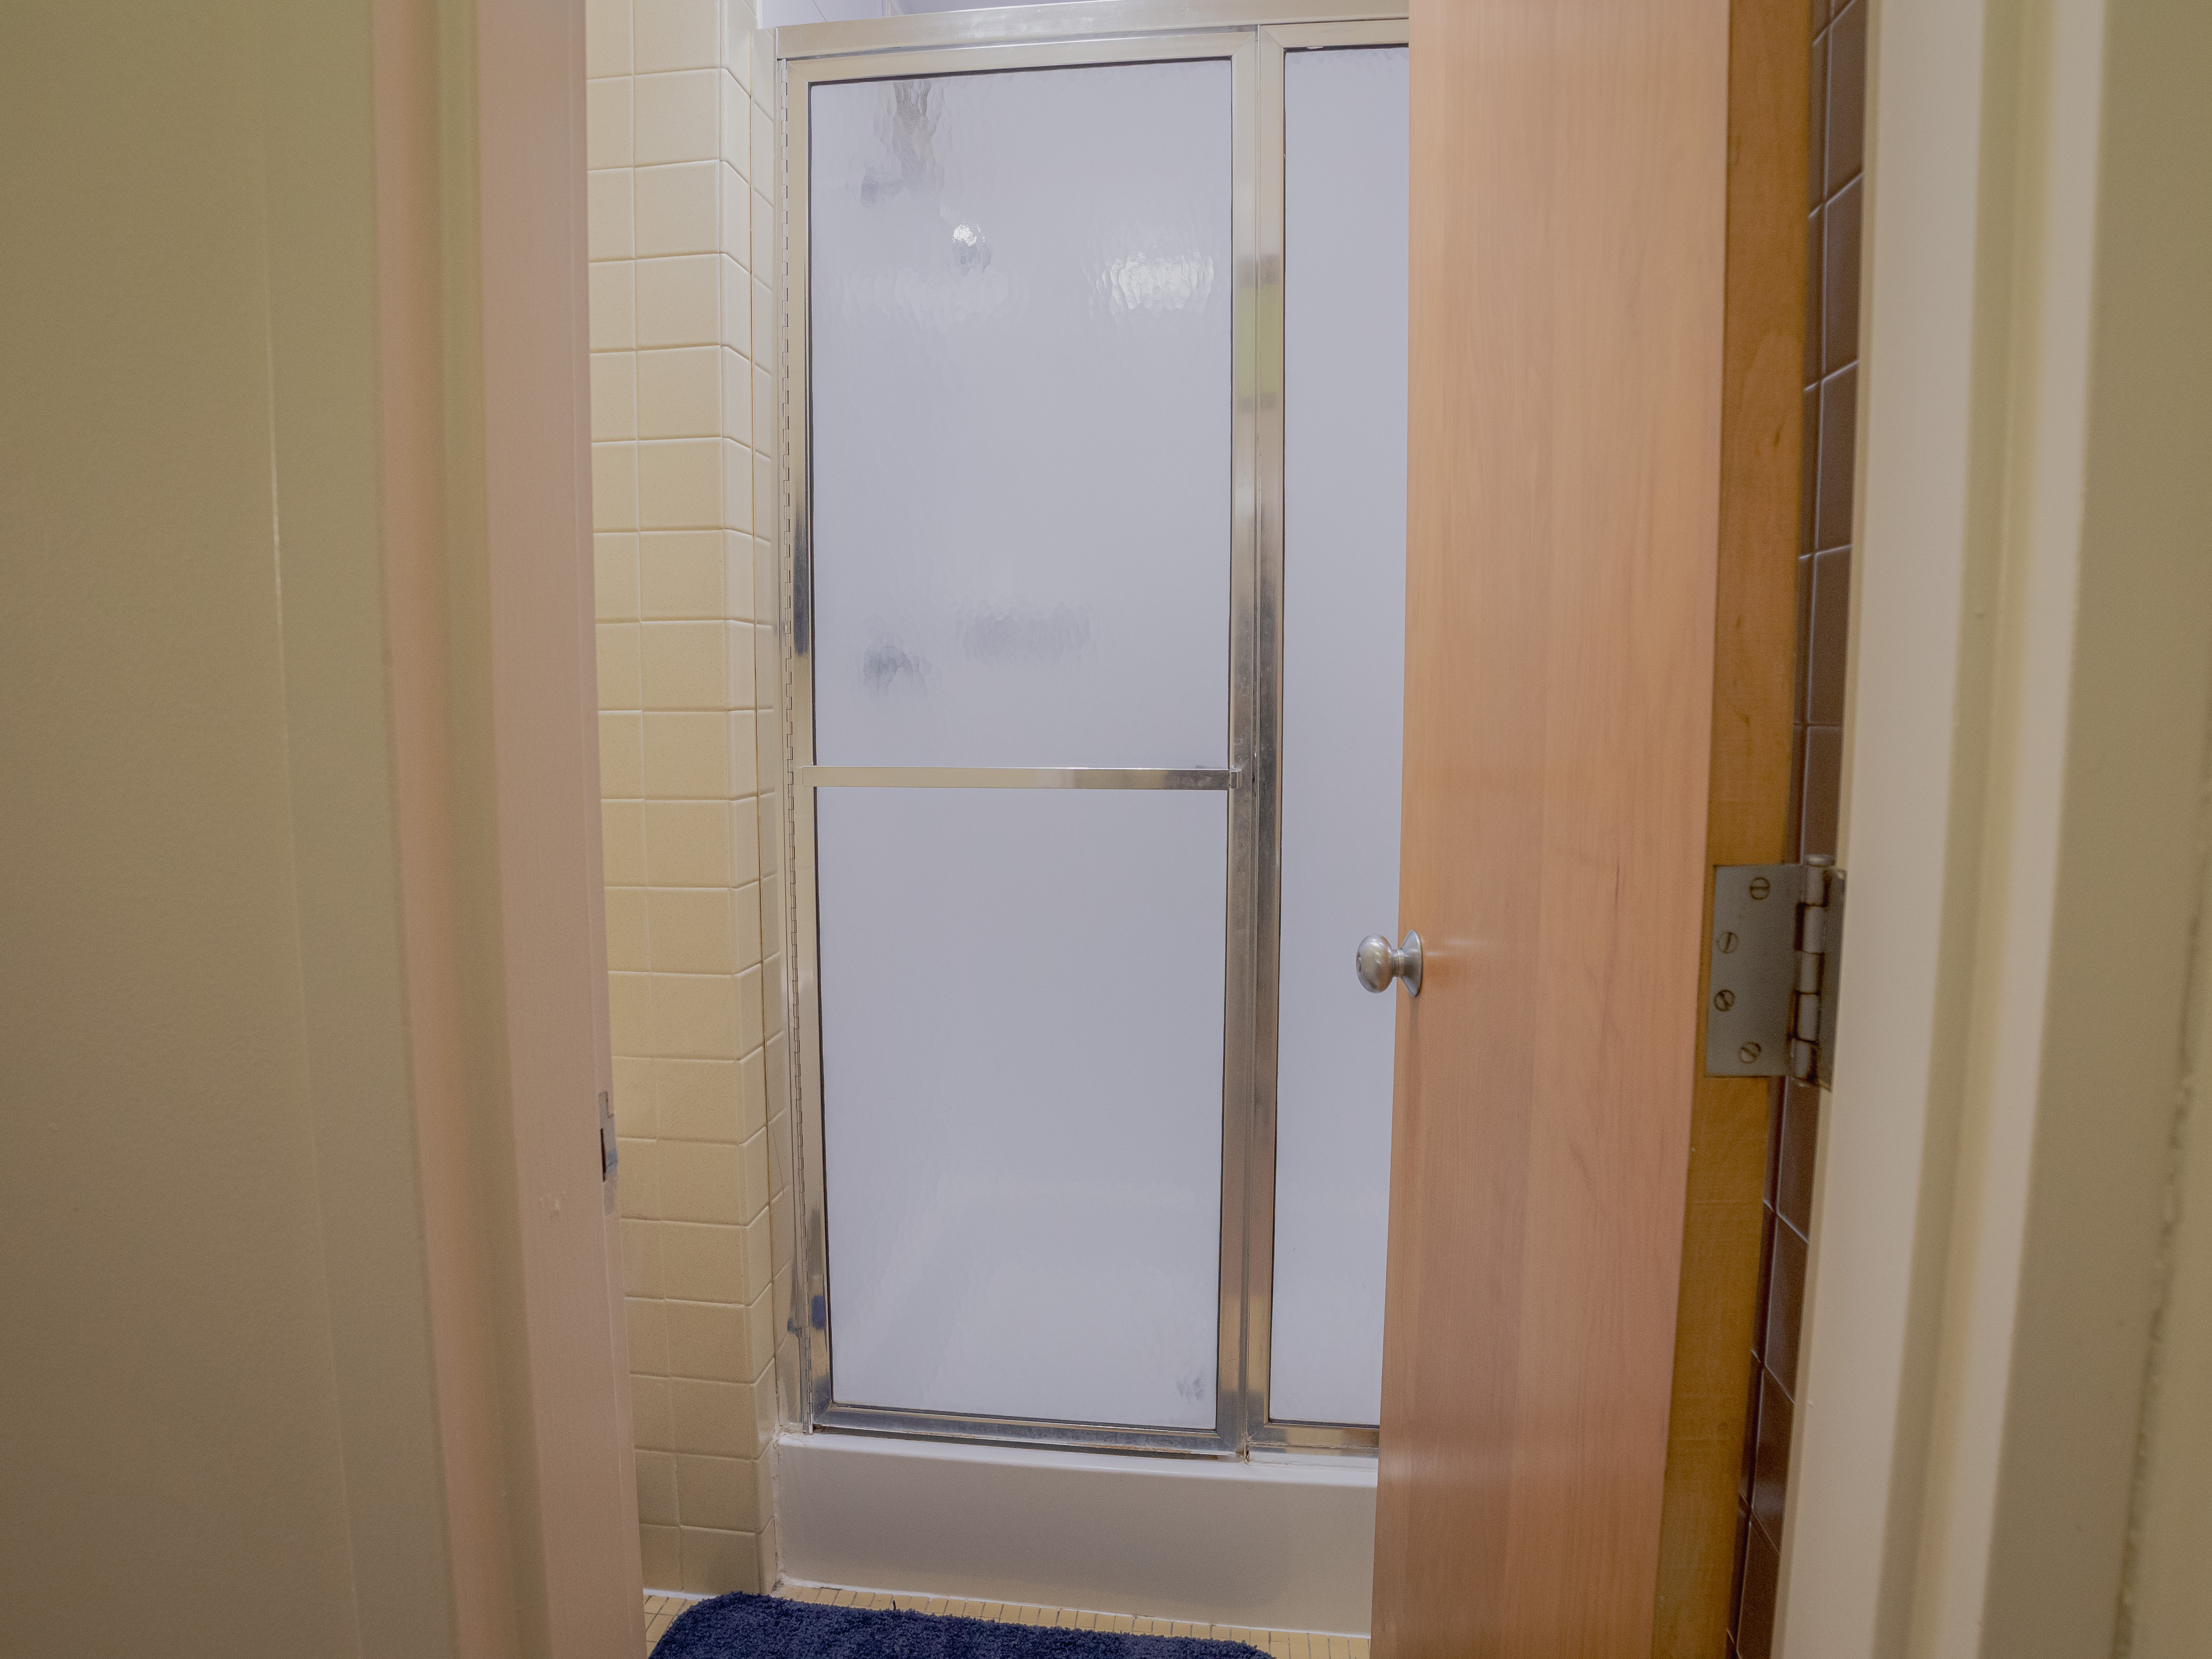 Picture of Canavan Hall shower area in bathroom.